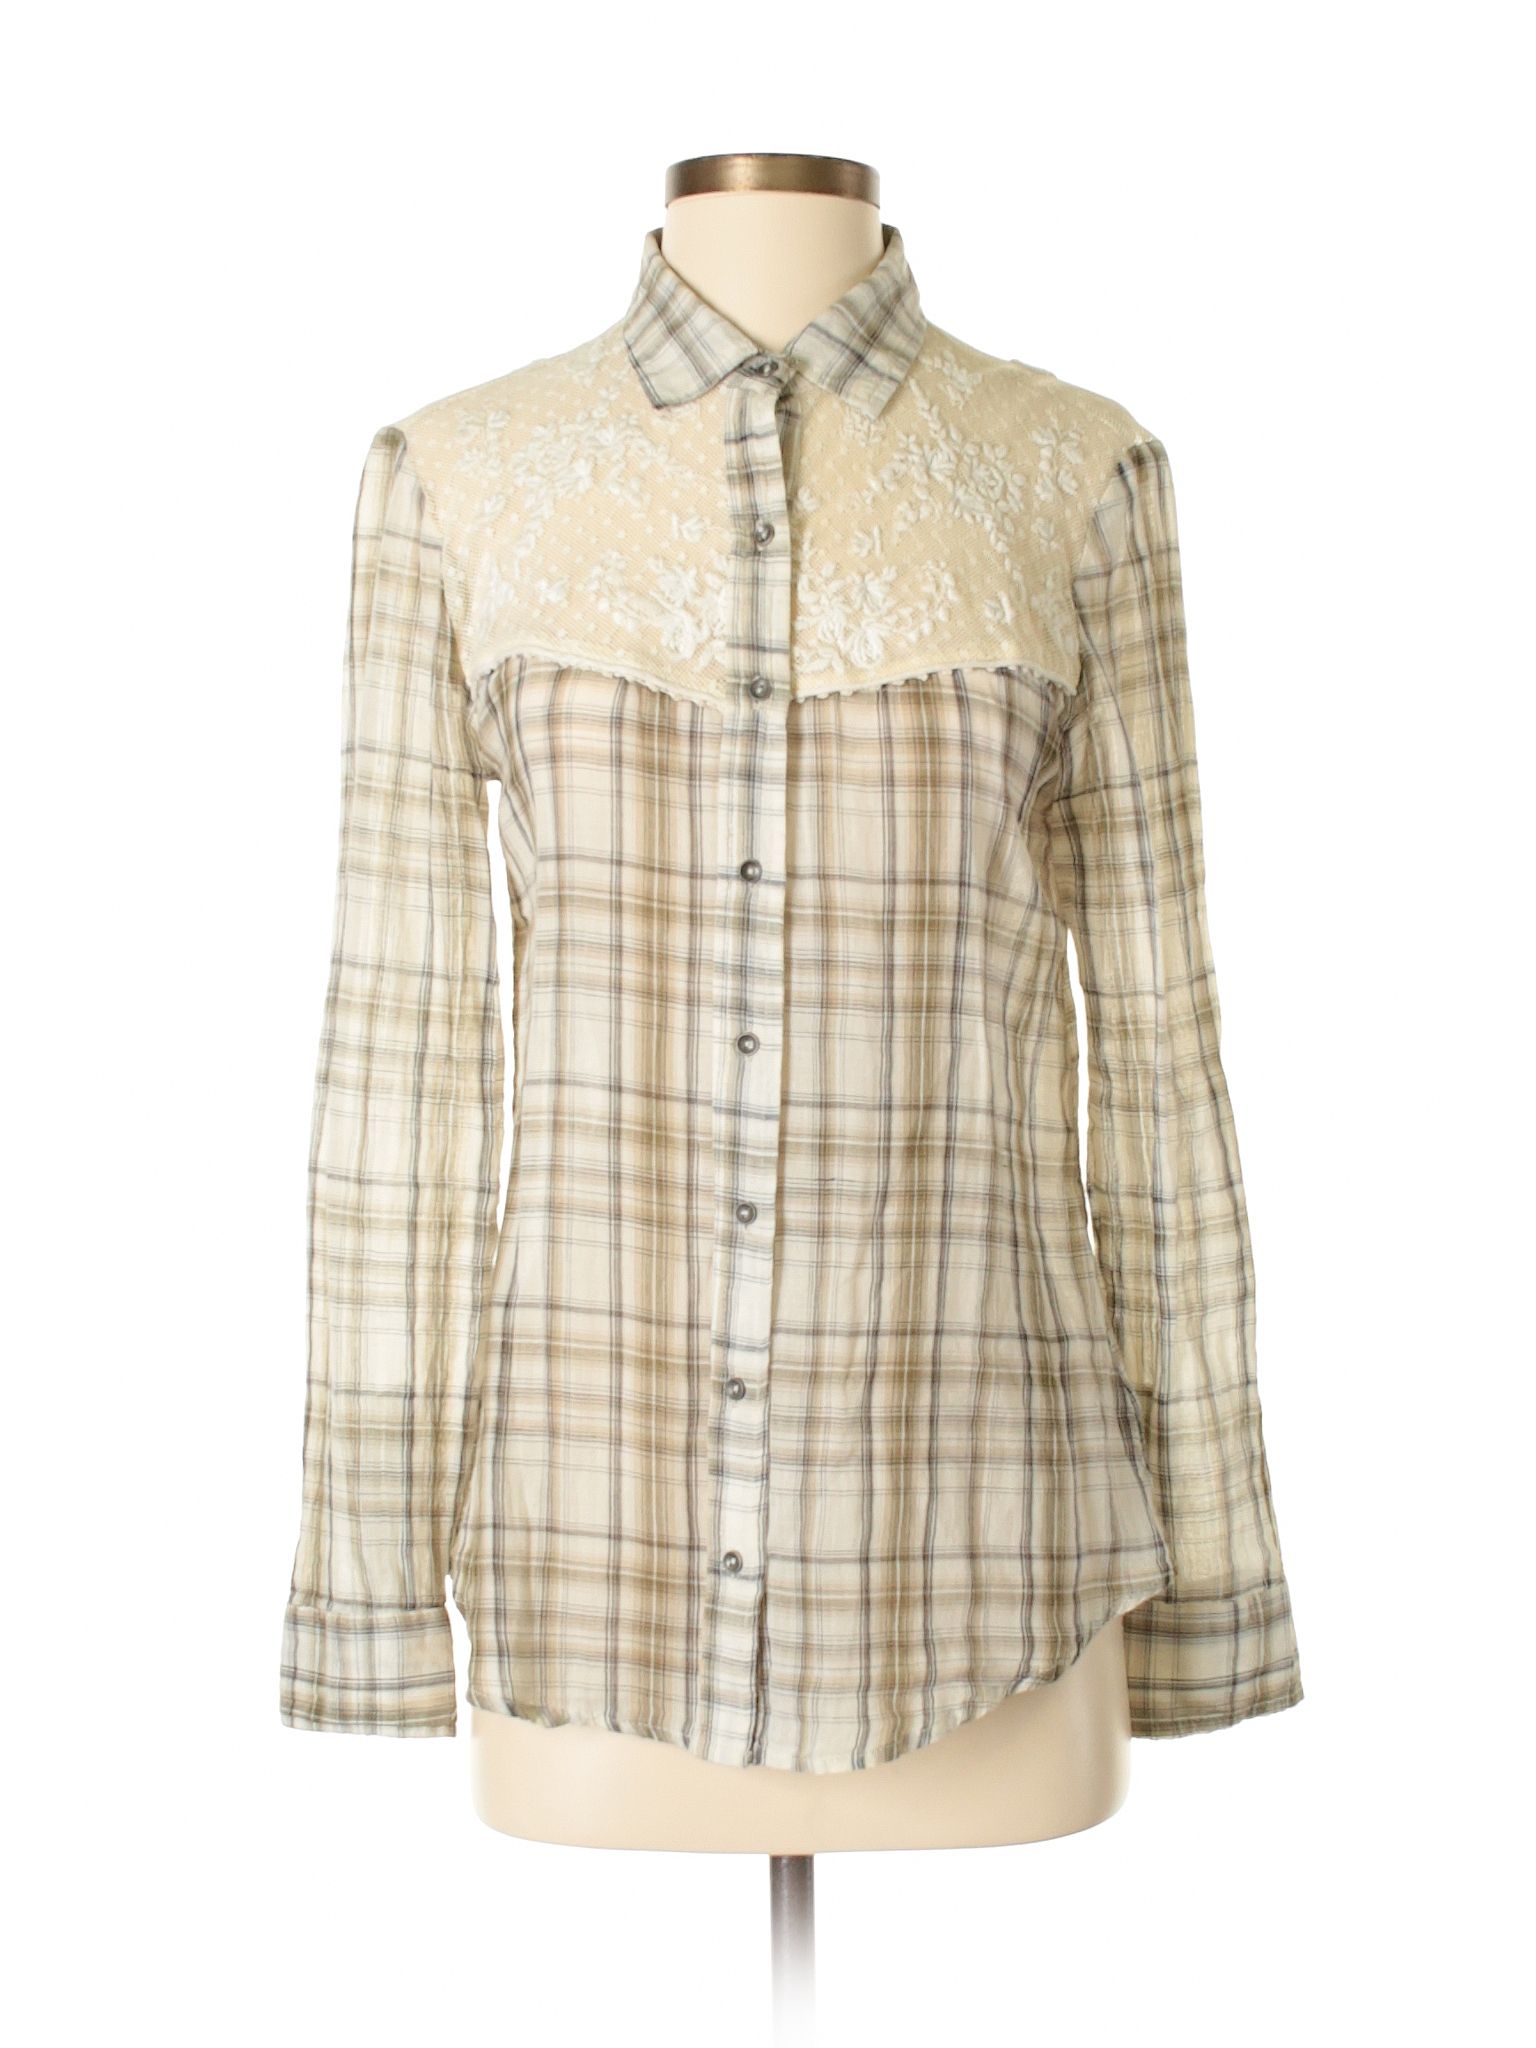 Free People Long Sleeve Button Down Shirt Size 4: Beige Women's Tops - 33980441 | thredUP